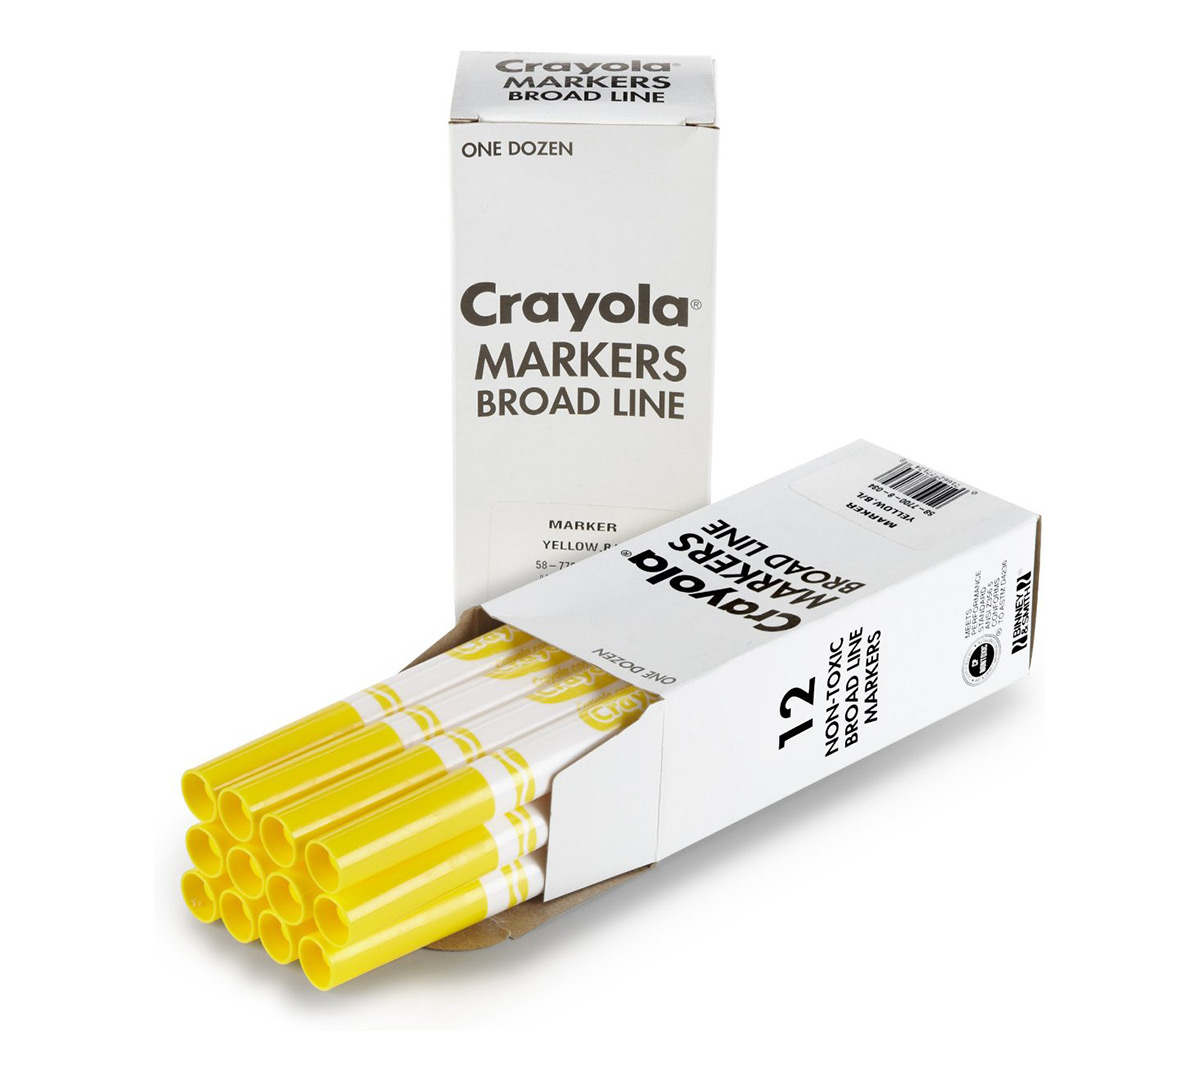 Crayola Orange Markers in Bulk, 12 Count, Crayola.com